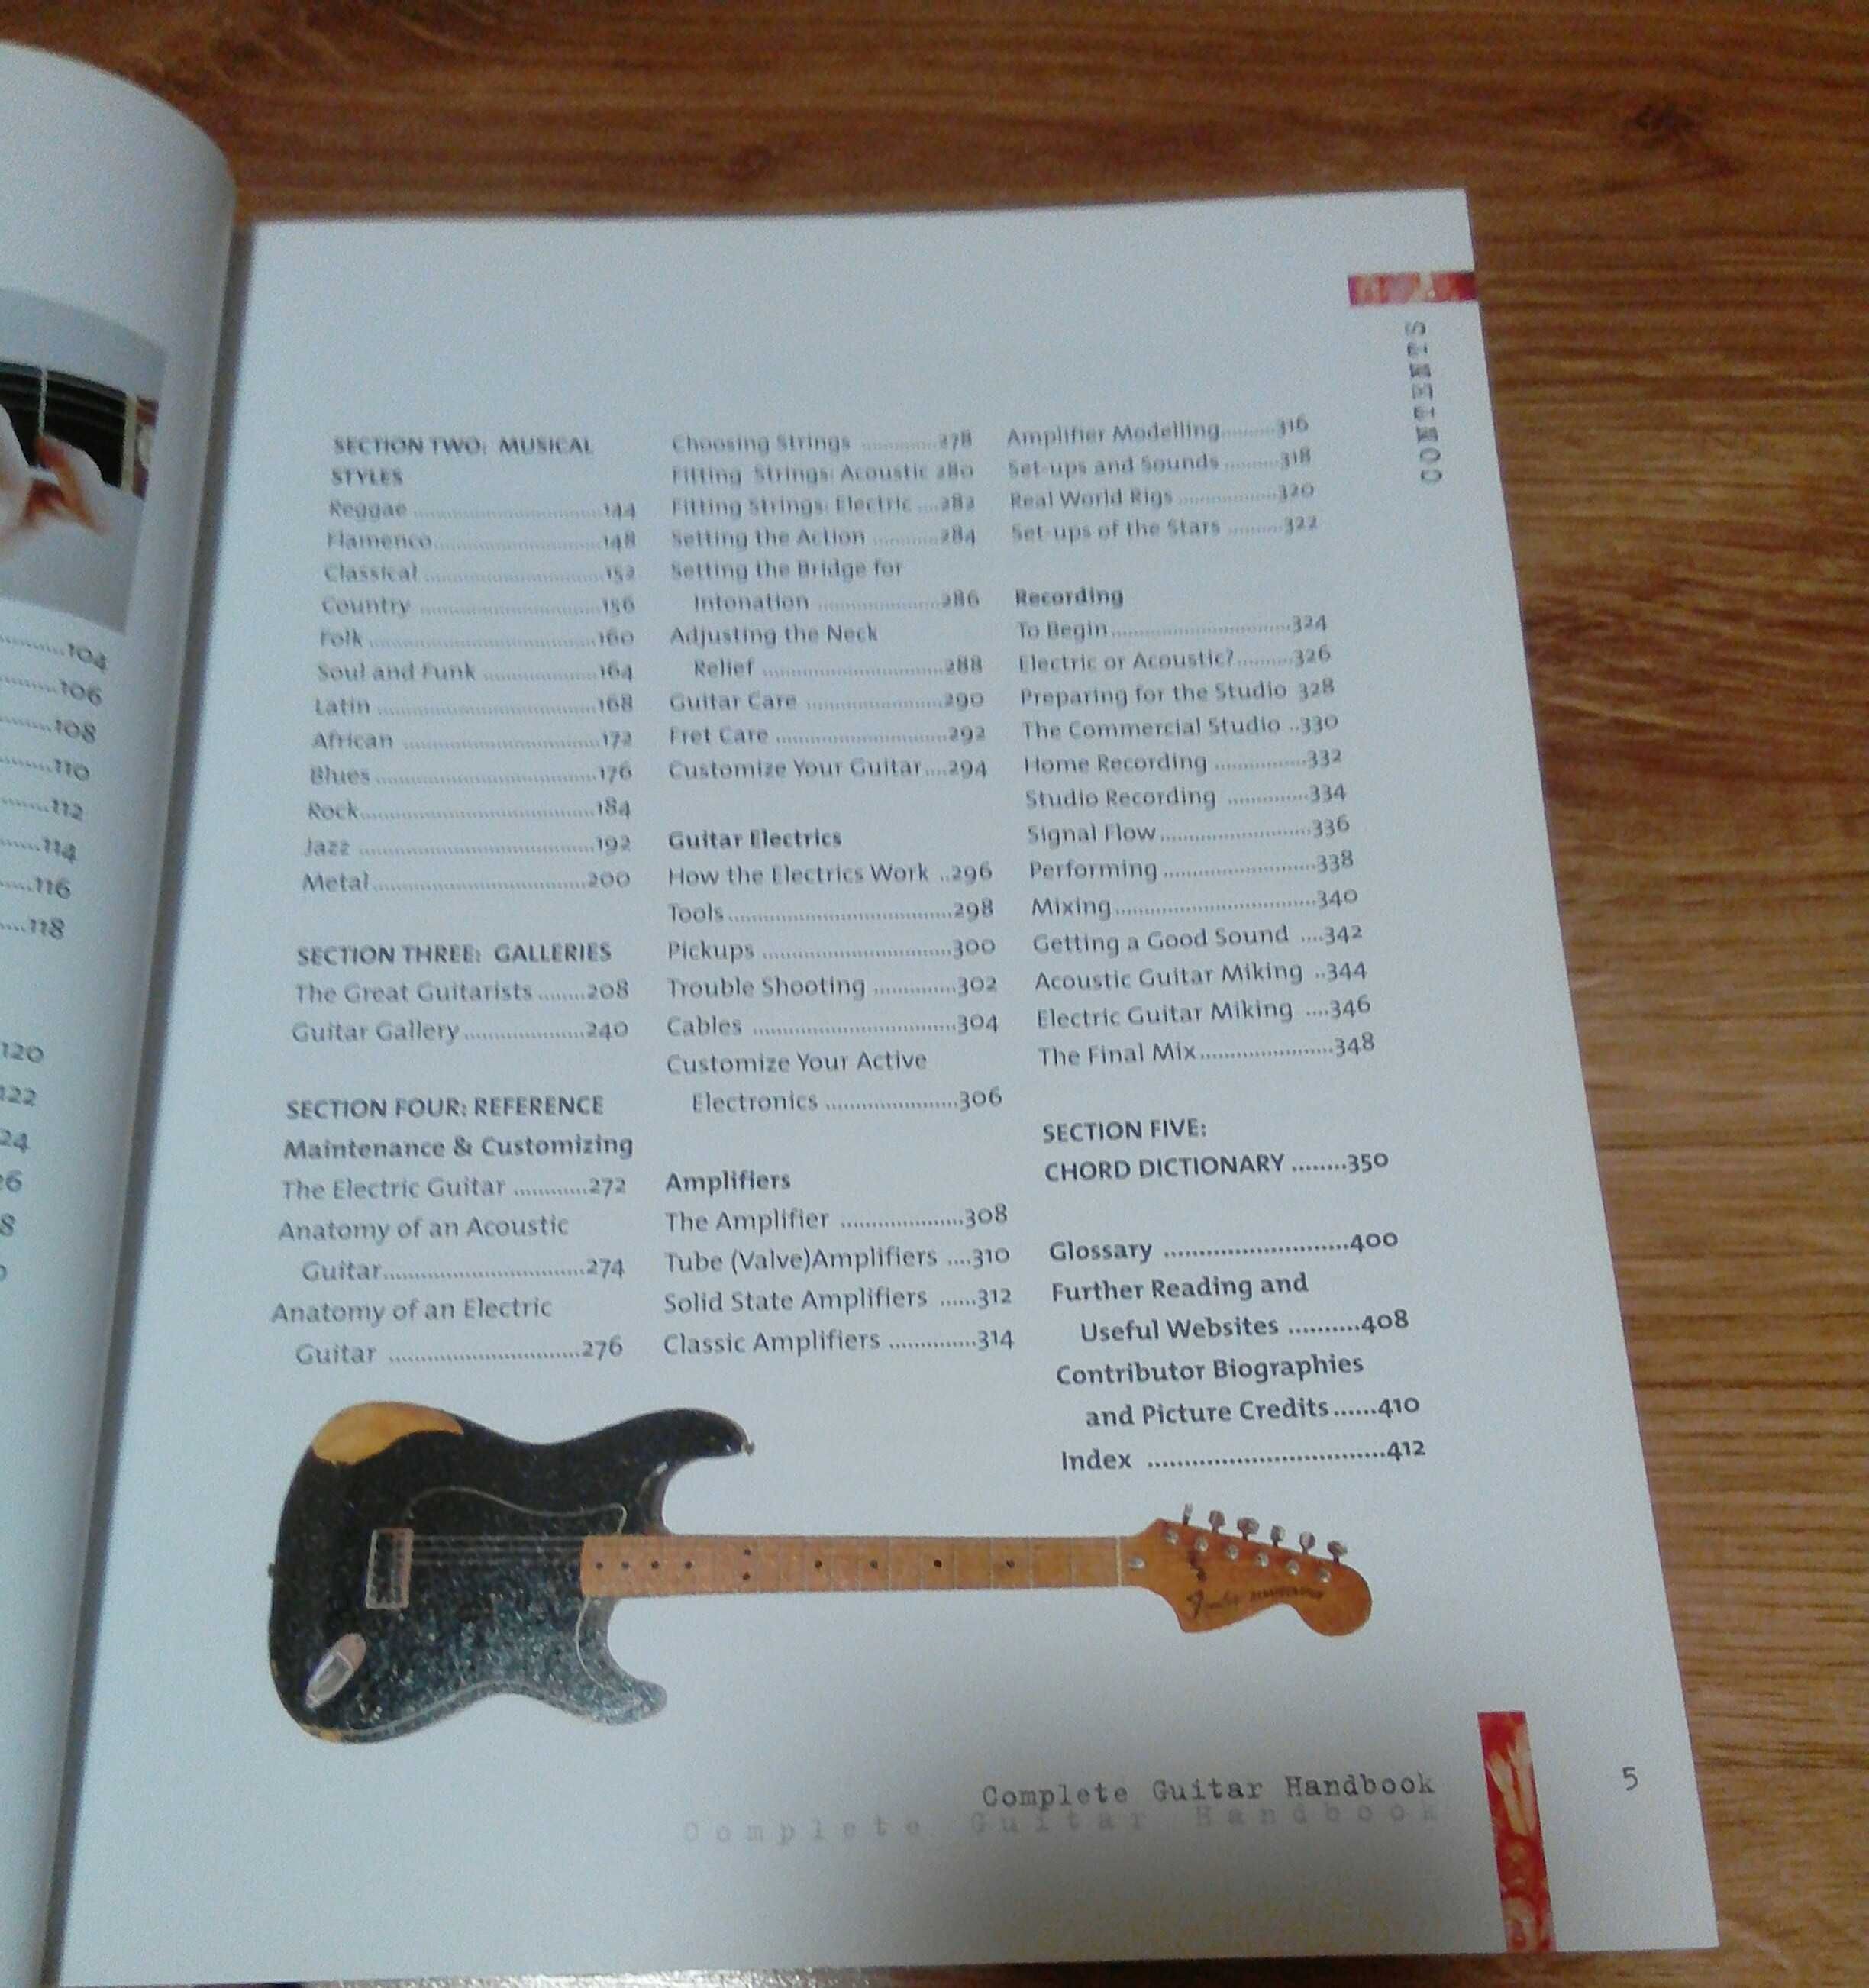 Billboard Полное руководство по игре на гитаре книга